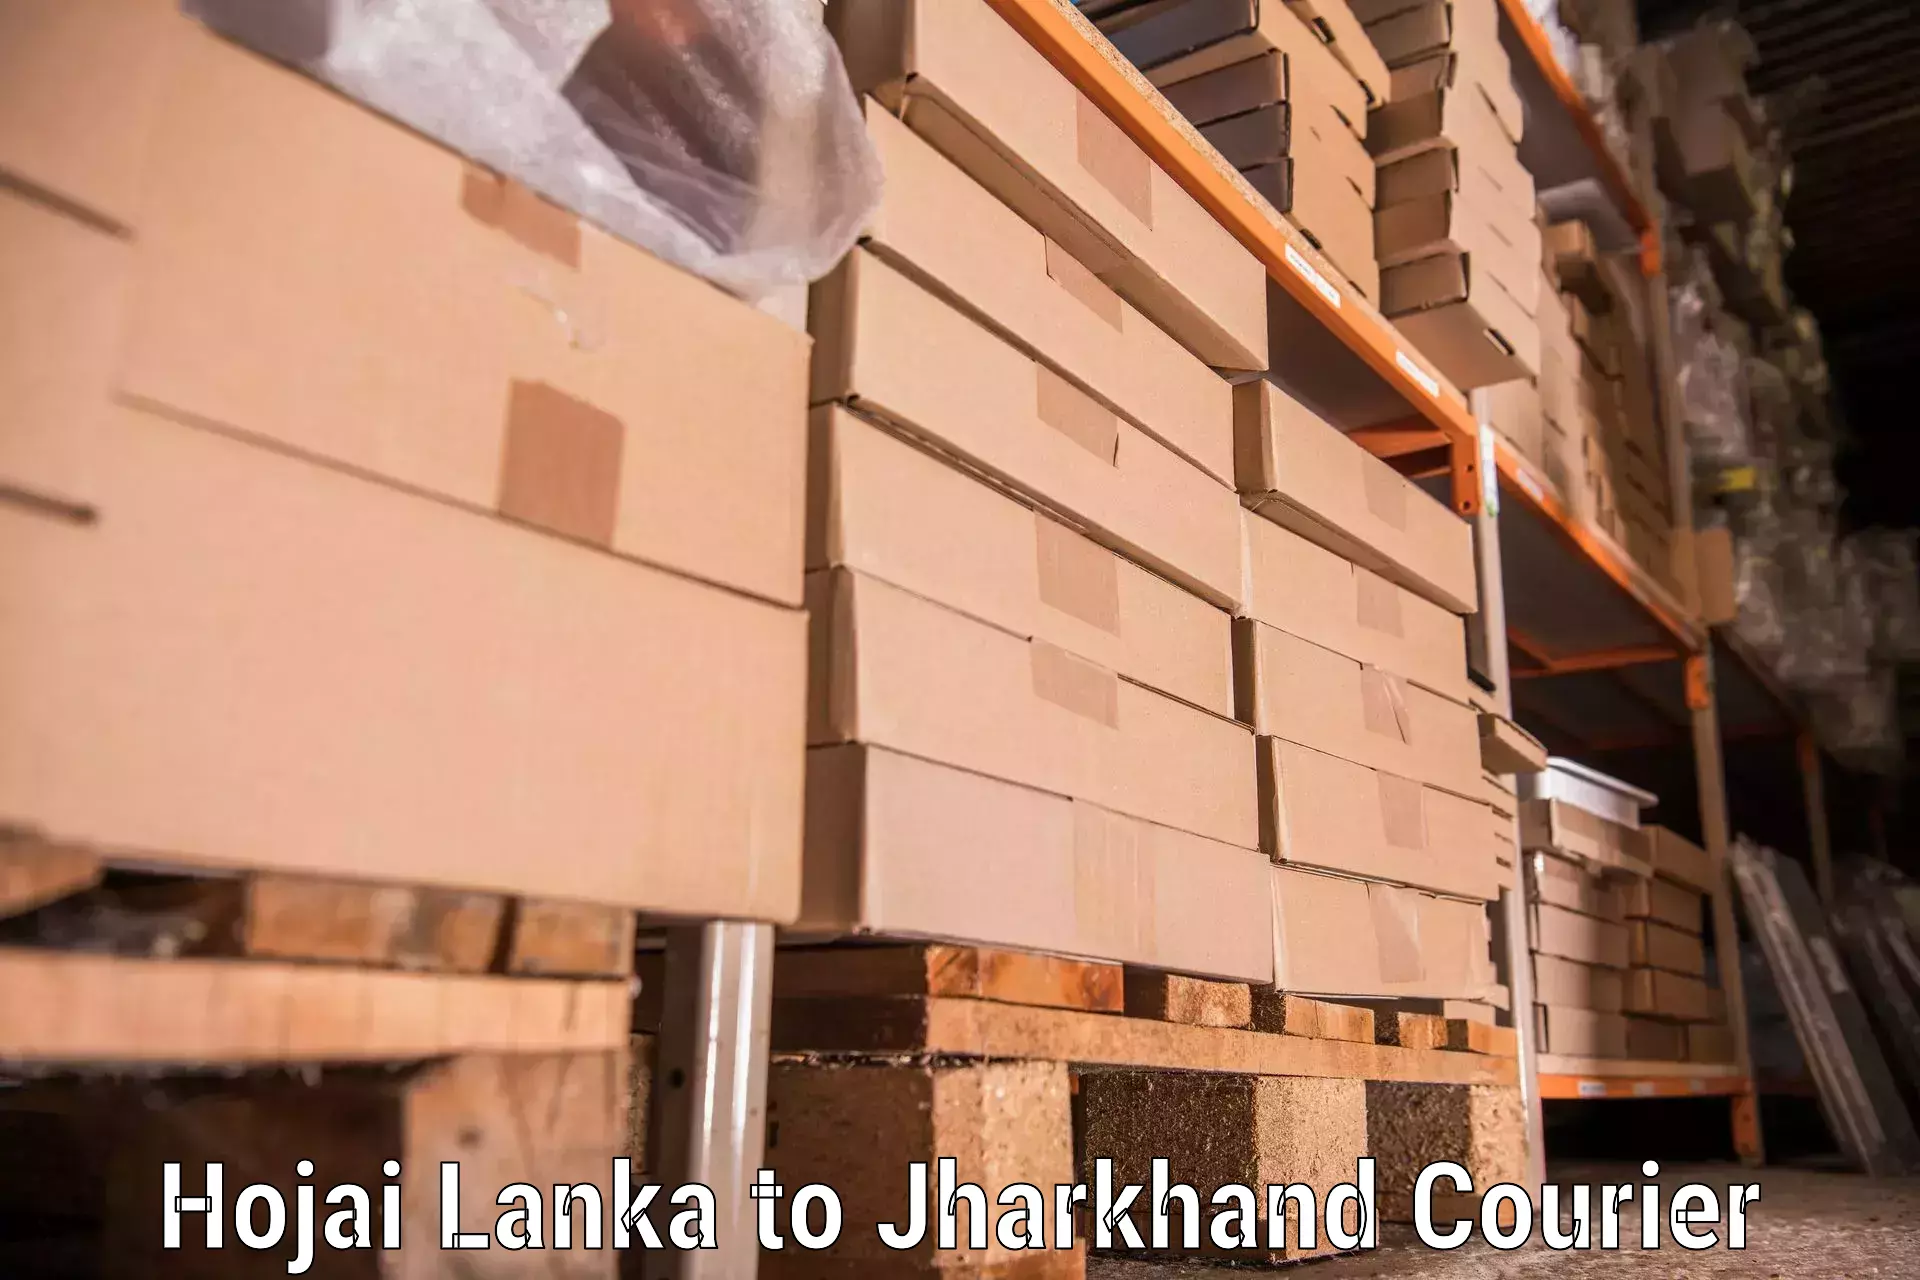 Trusted relocation services Hojai Lanka to Bokaro Steel City